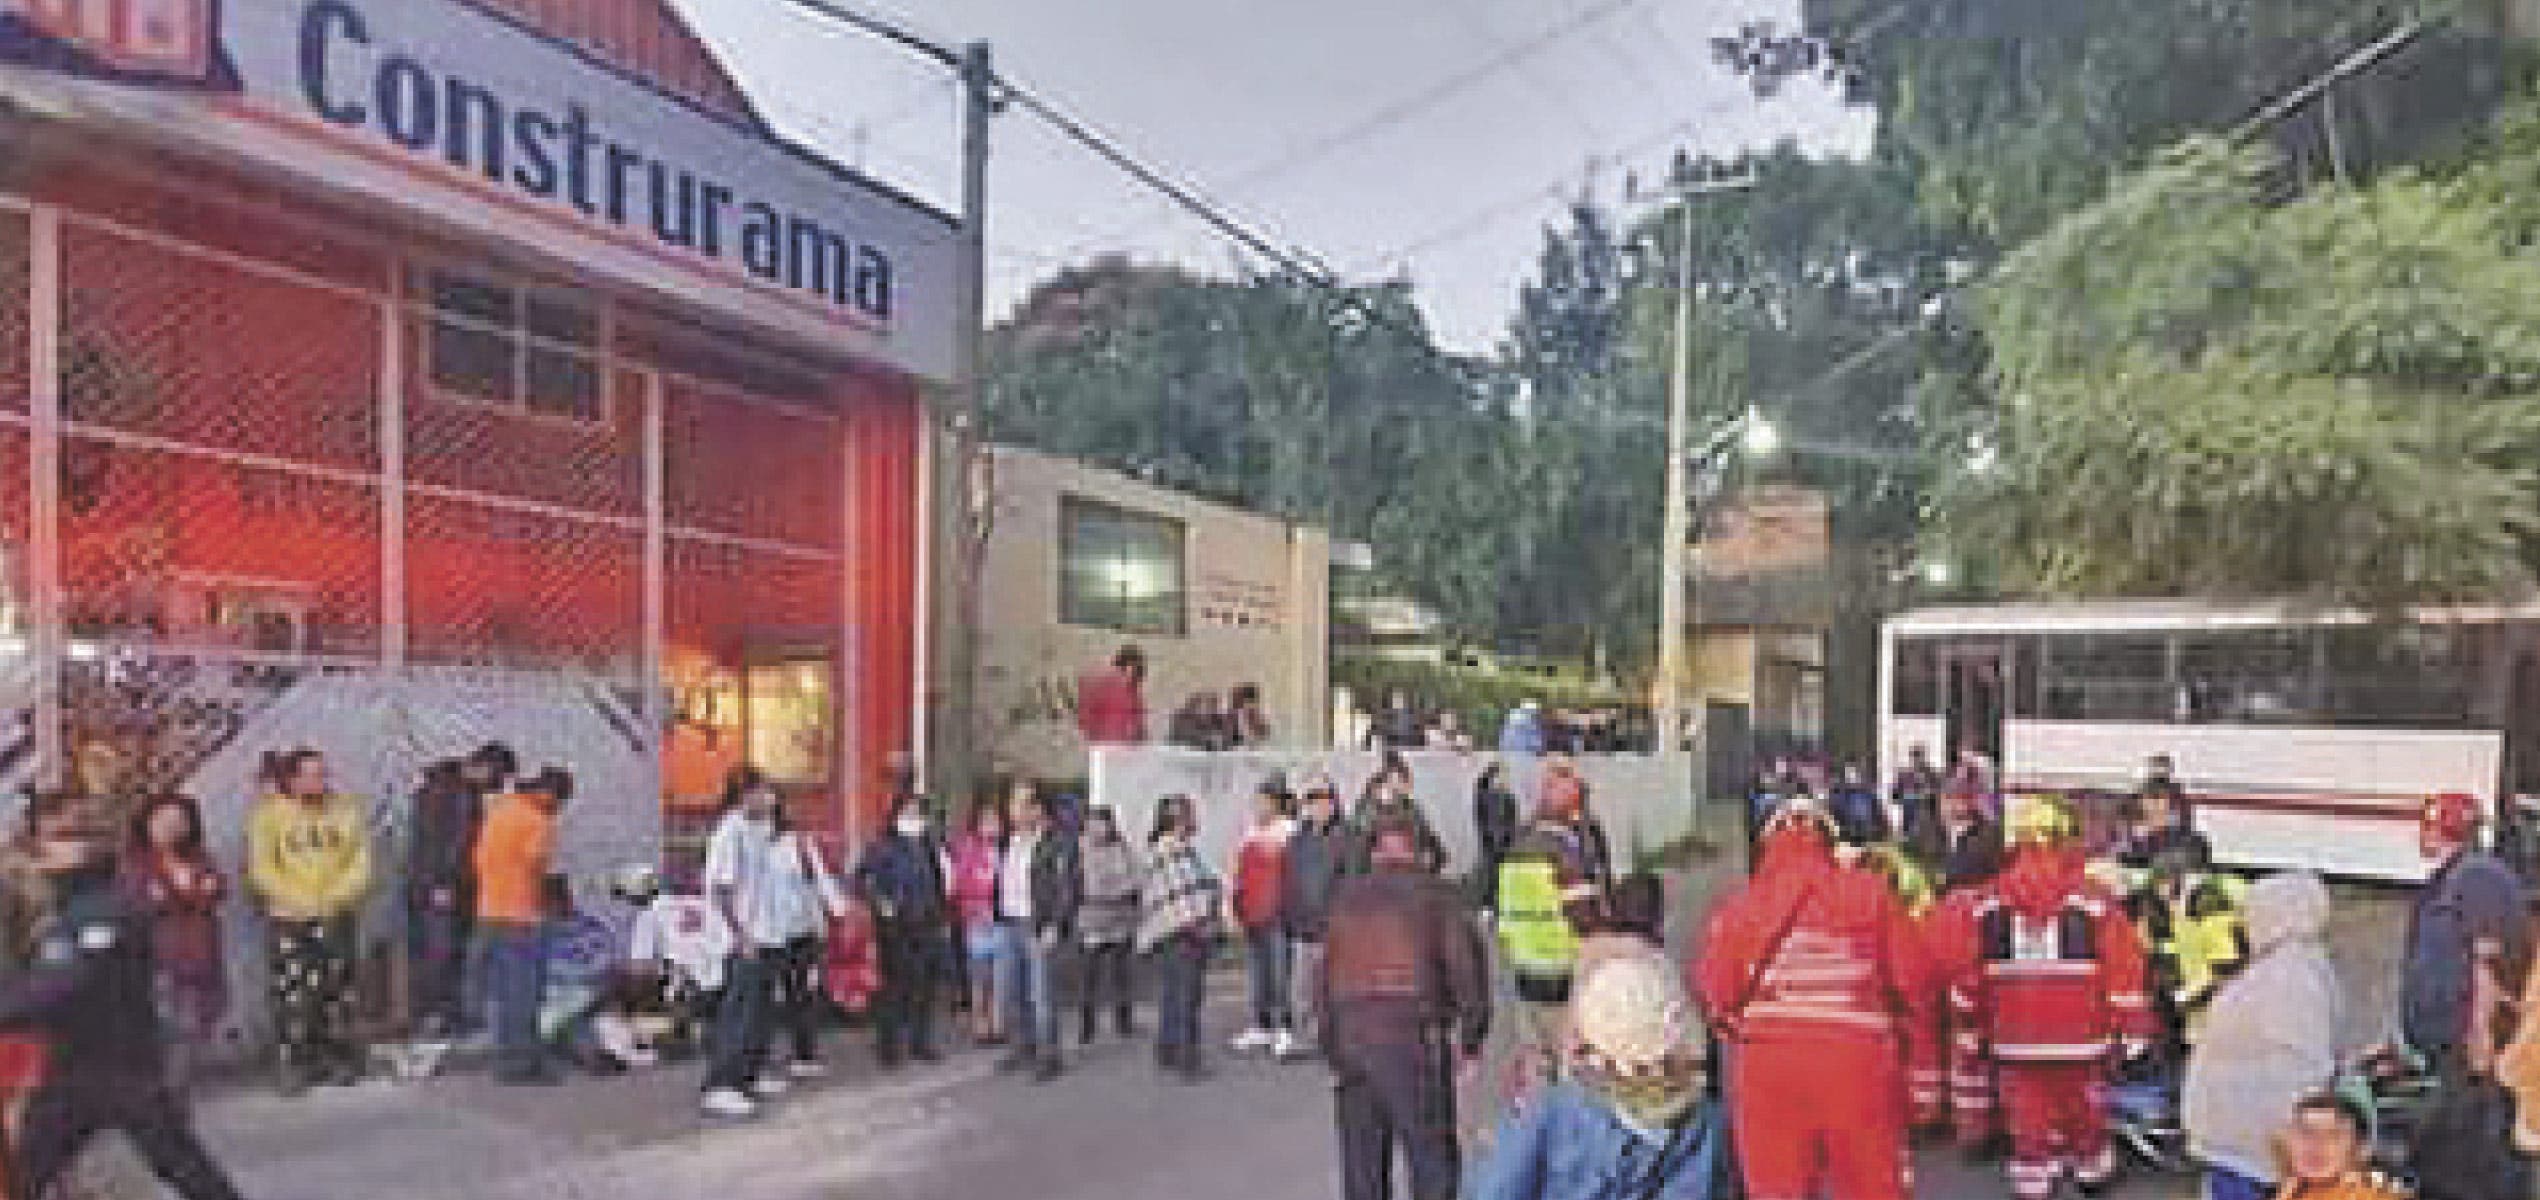 ACCIDENTE - Apoyan a los afectados de accidente en Tepoztlán